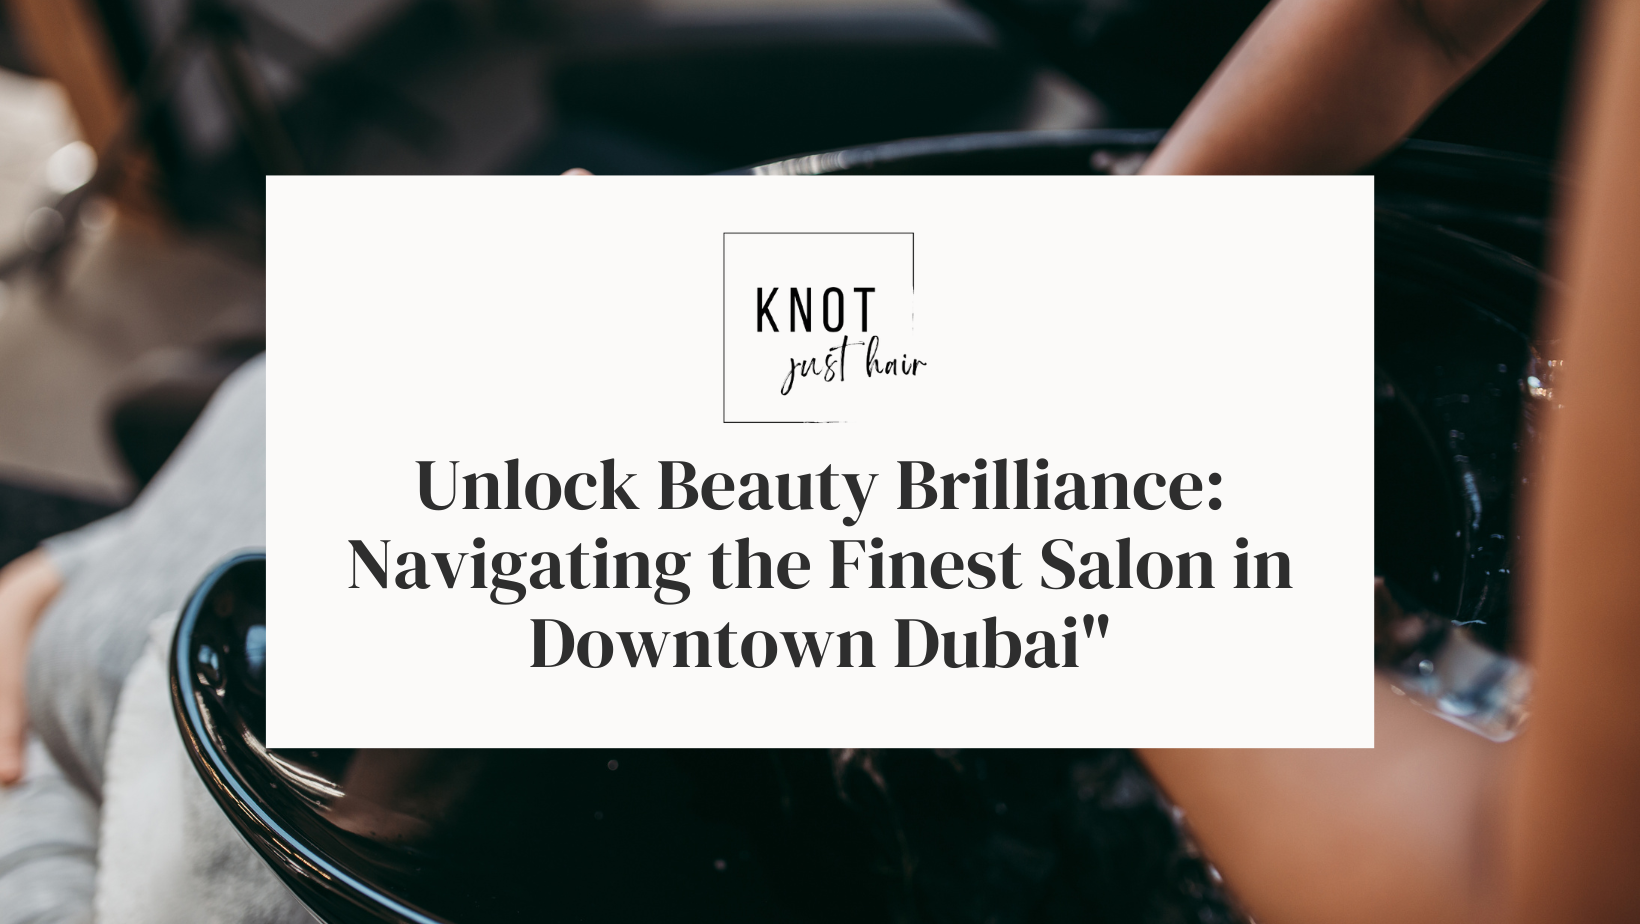 Unlock Beauty Brilliance: Navigating the Finest Salon in Downtown Dubai"